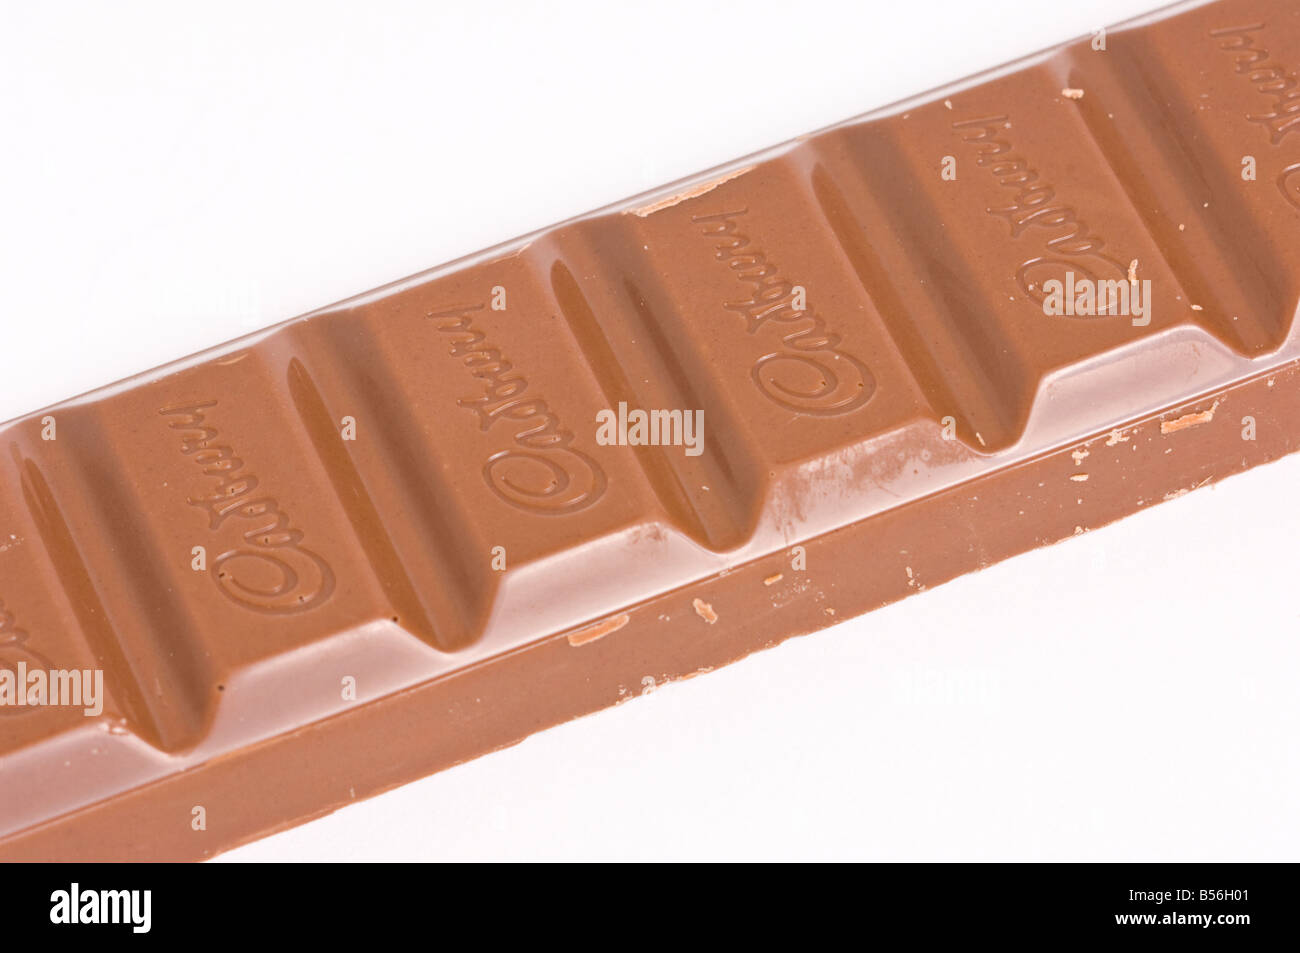 Cadburys Dairy Milk Chocolate bar (unwrapped) on white background Stock Photo